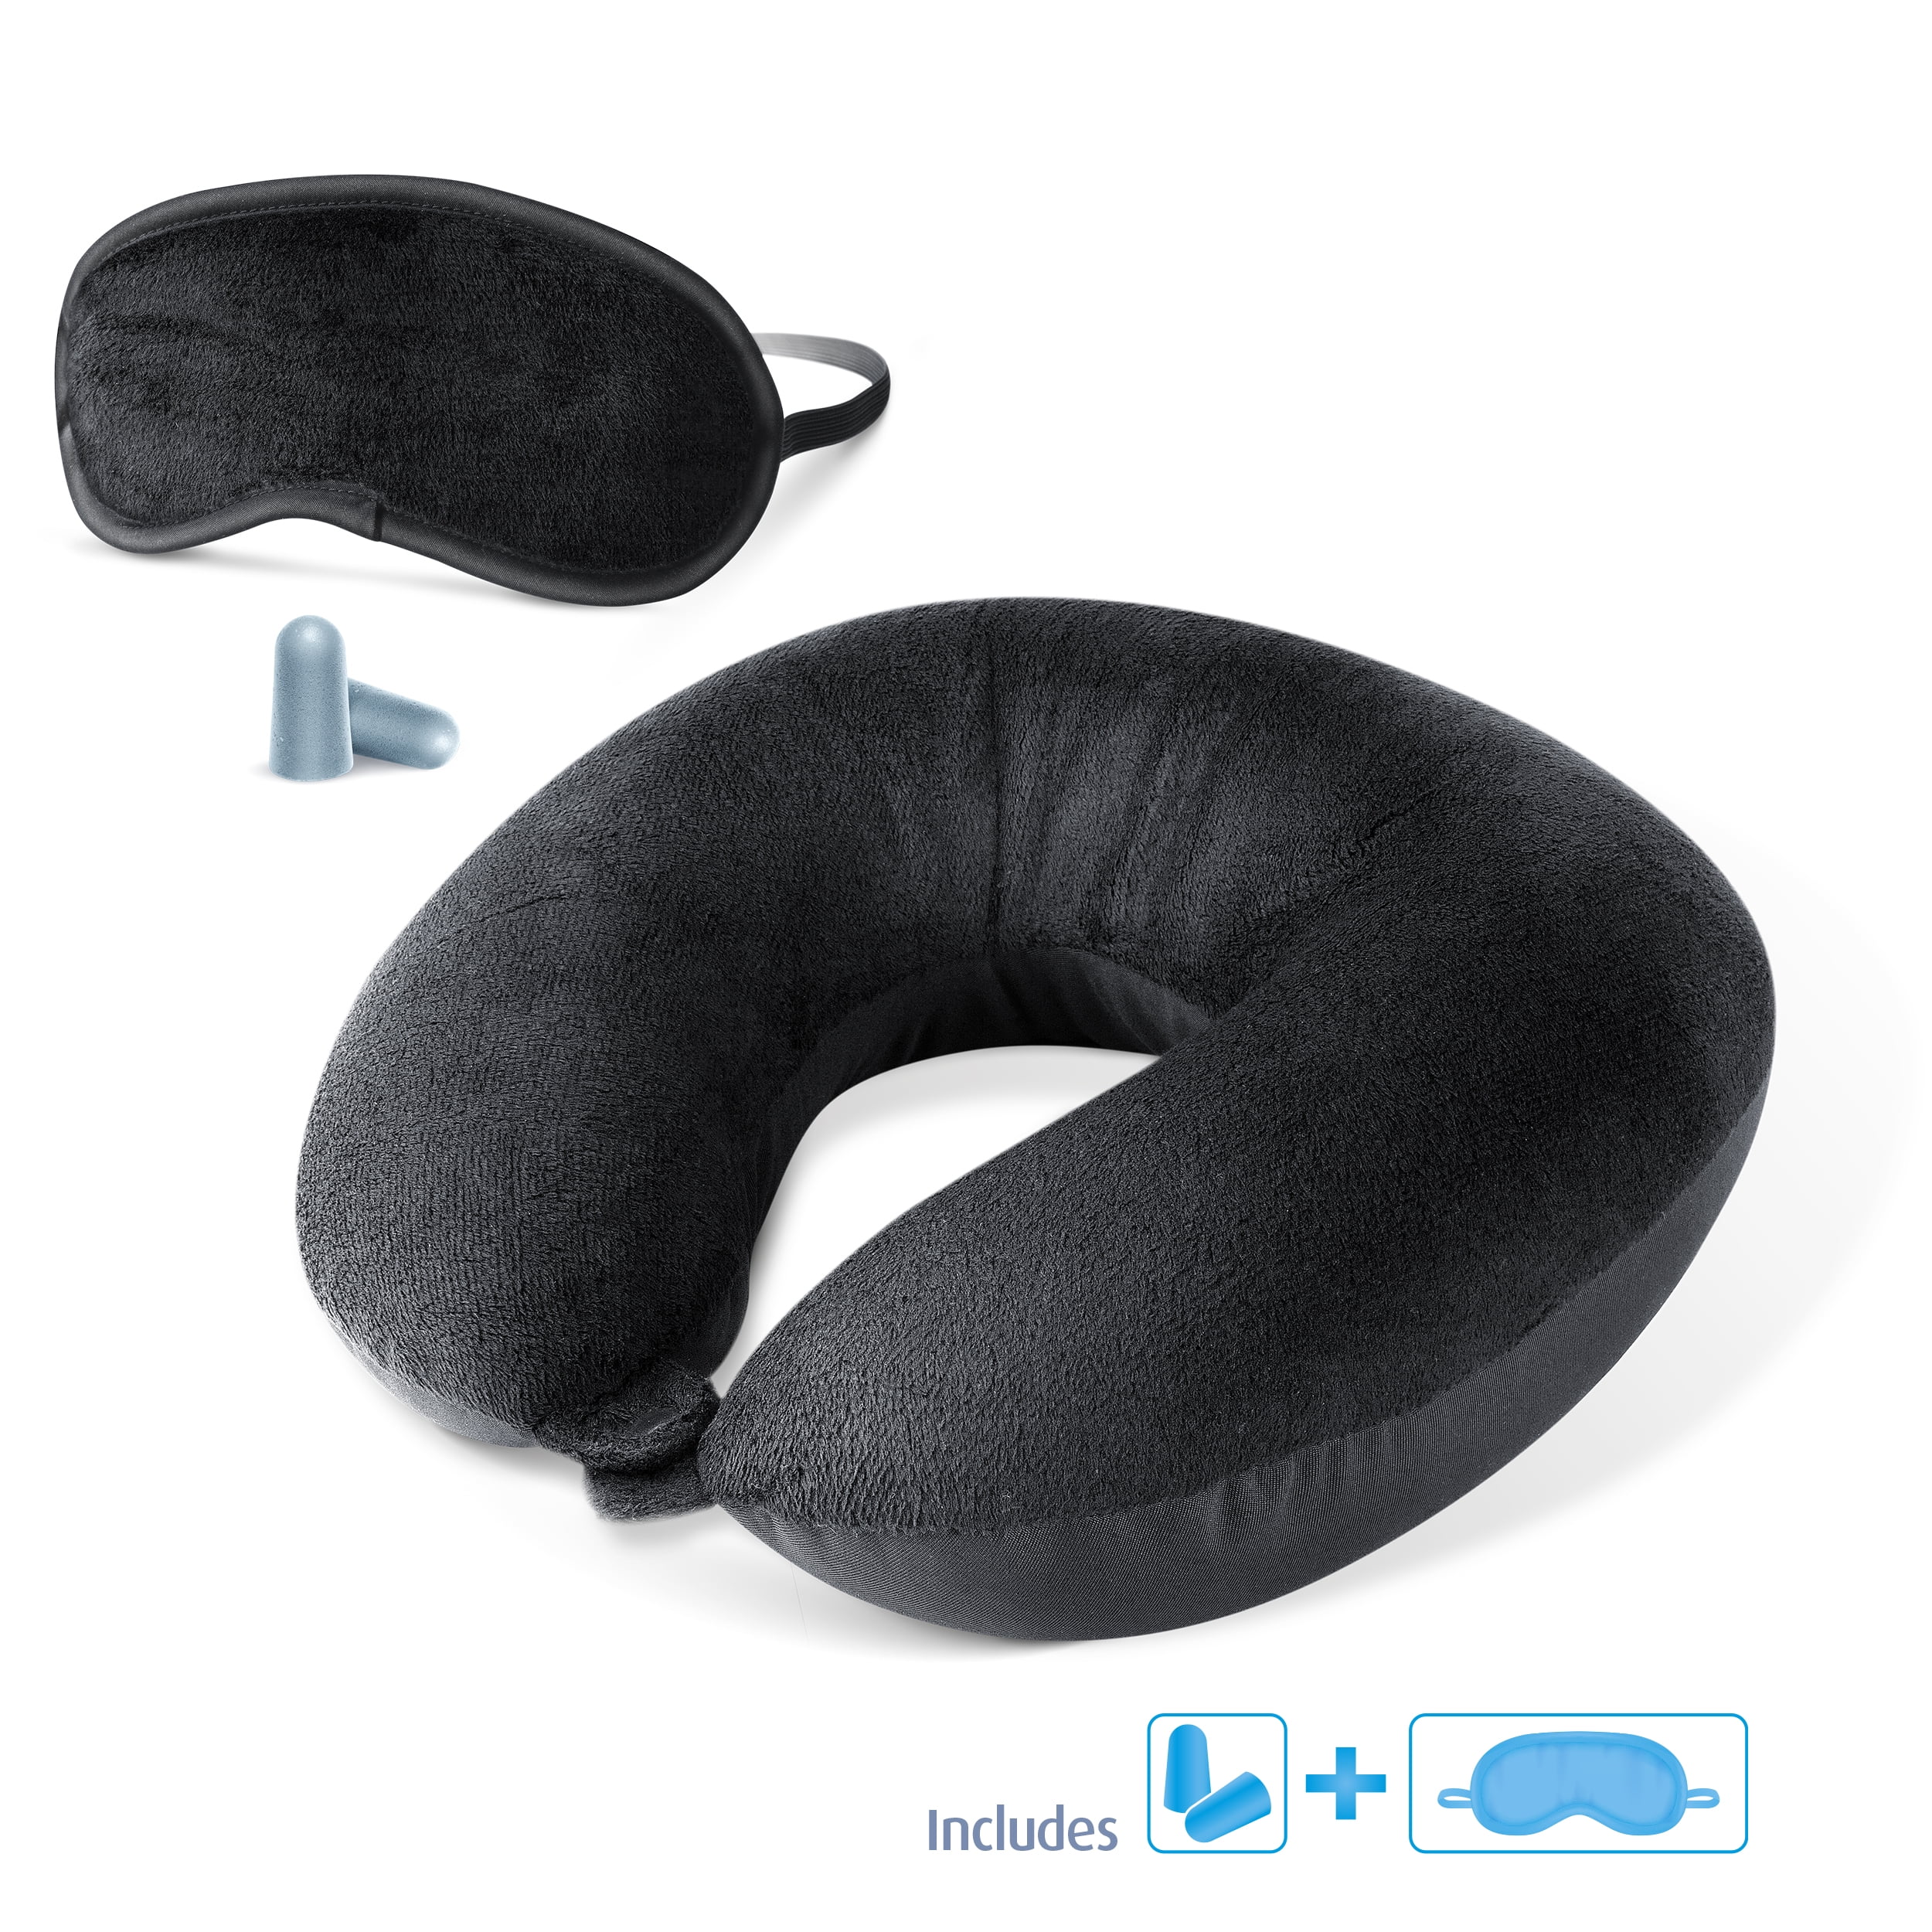 Cloudz Dual Comfort Microbead Travel Neck Pillow with Premium 